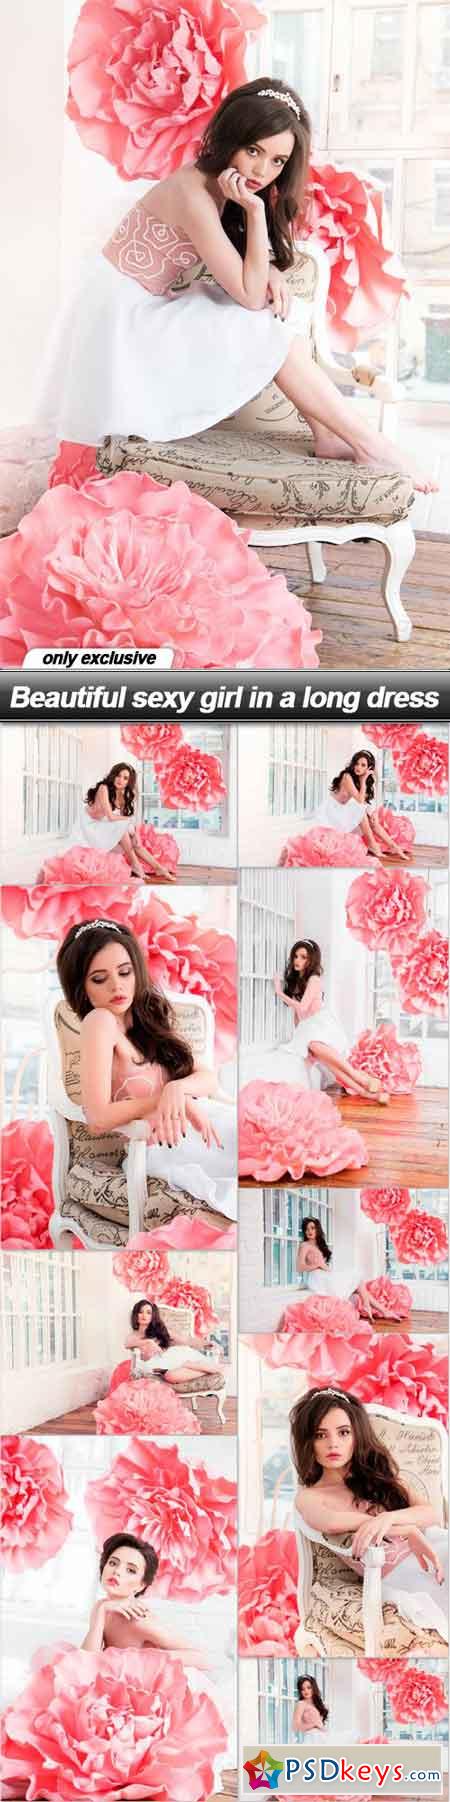 Beautiful sexy girl in a long dress - 10 UHQ JPEG